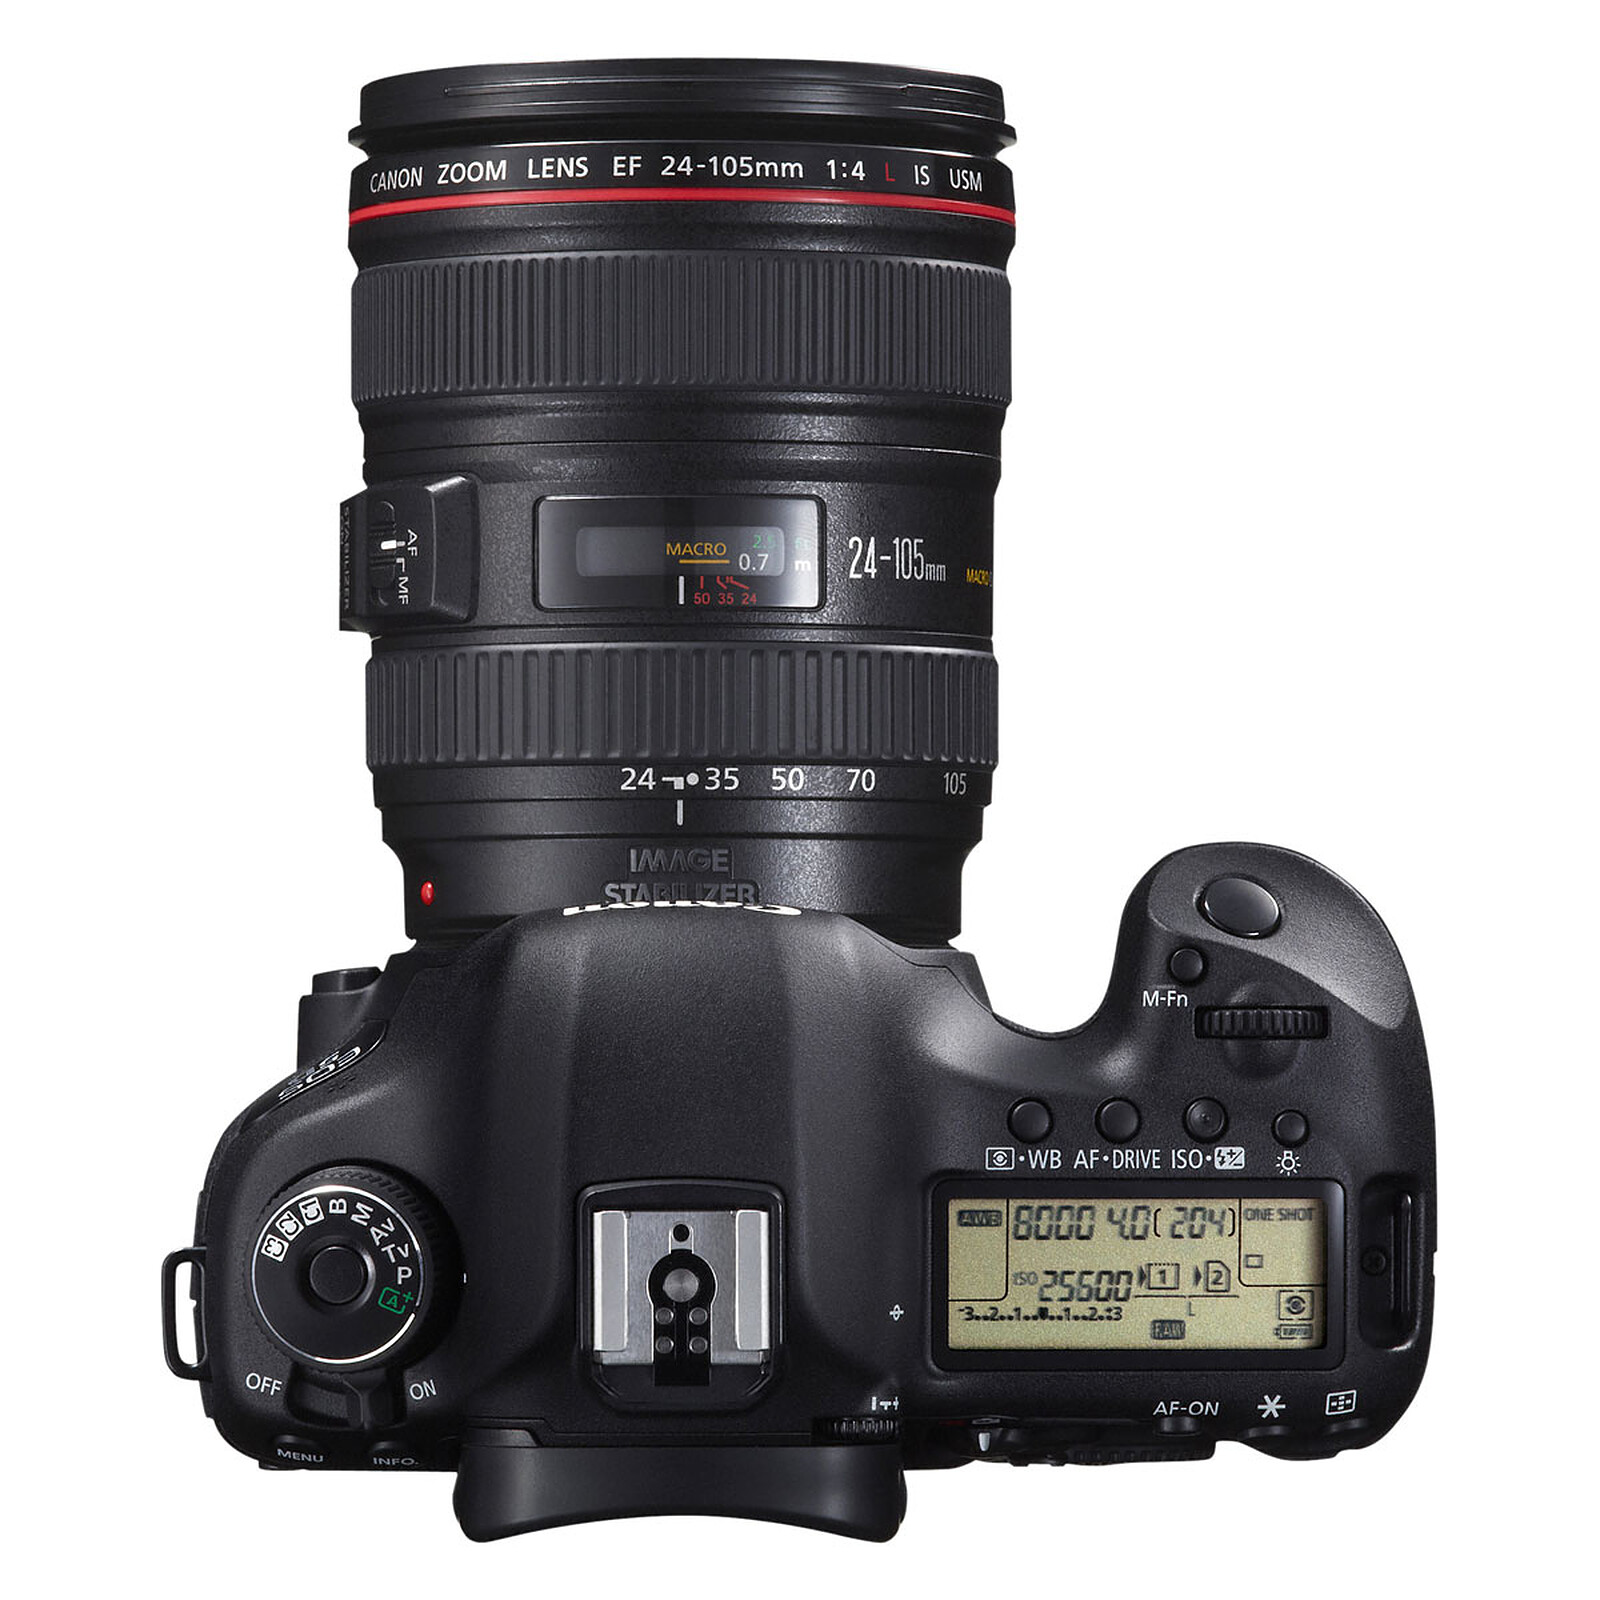 Canon Eos 5d Mark Iii Objectif 24 105 Mm Appareil Photo Reflex Canon Sur Ldlc Museericorde